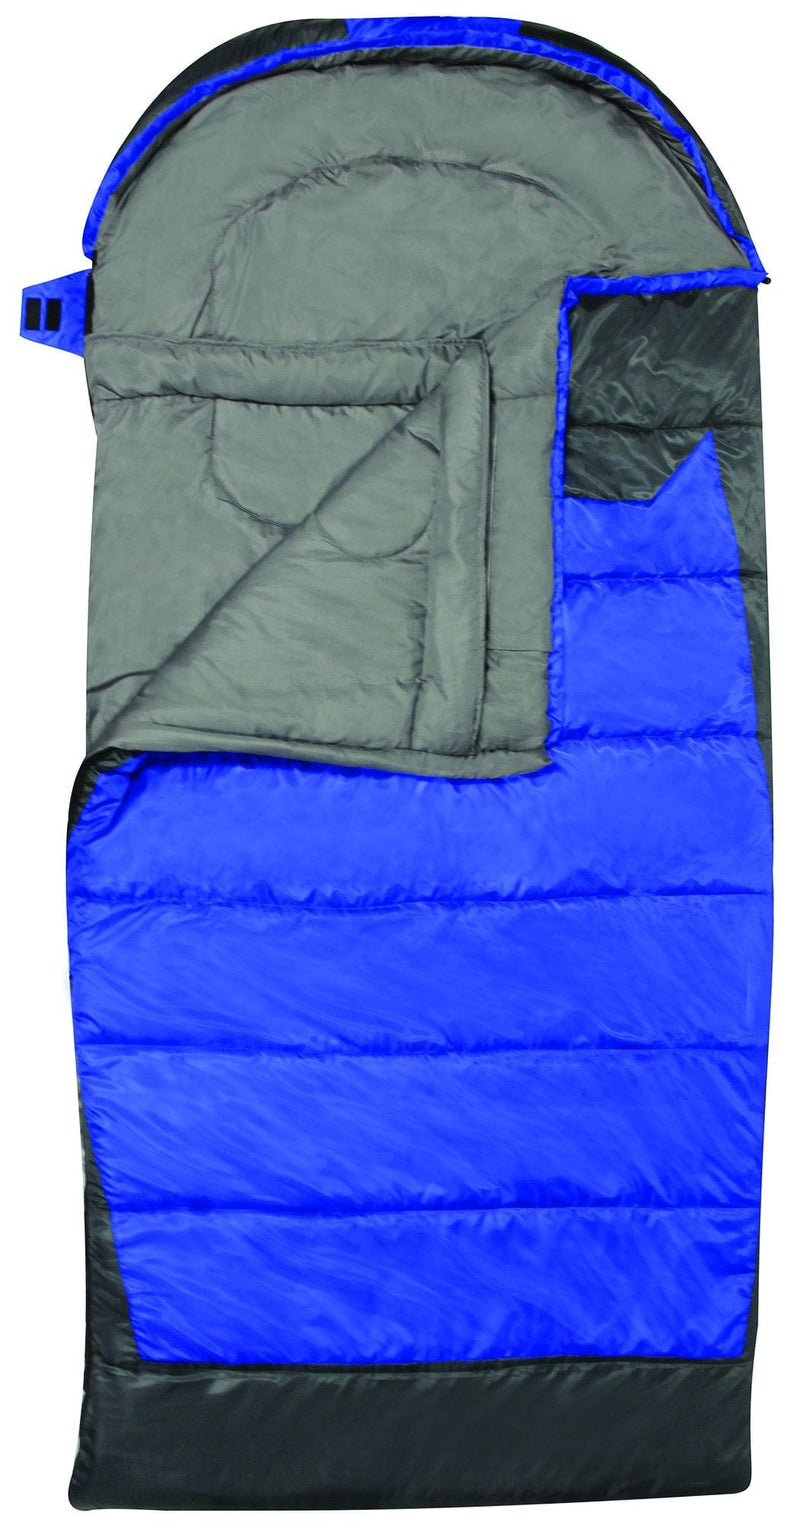 Sleeping bag heat zone cs400 -25C -13F 78+15x42 inch 198+38x107 cm